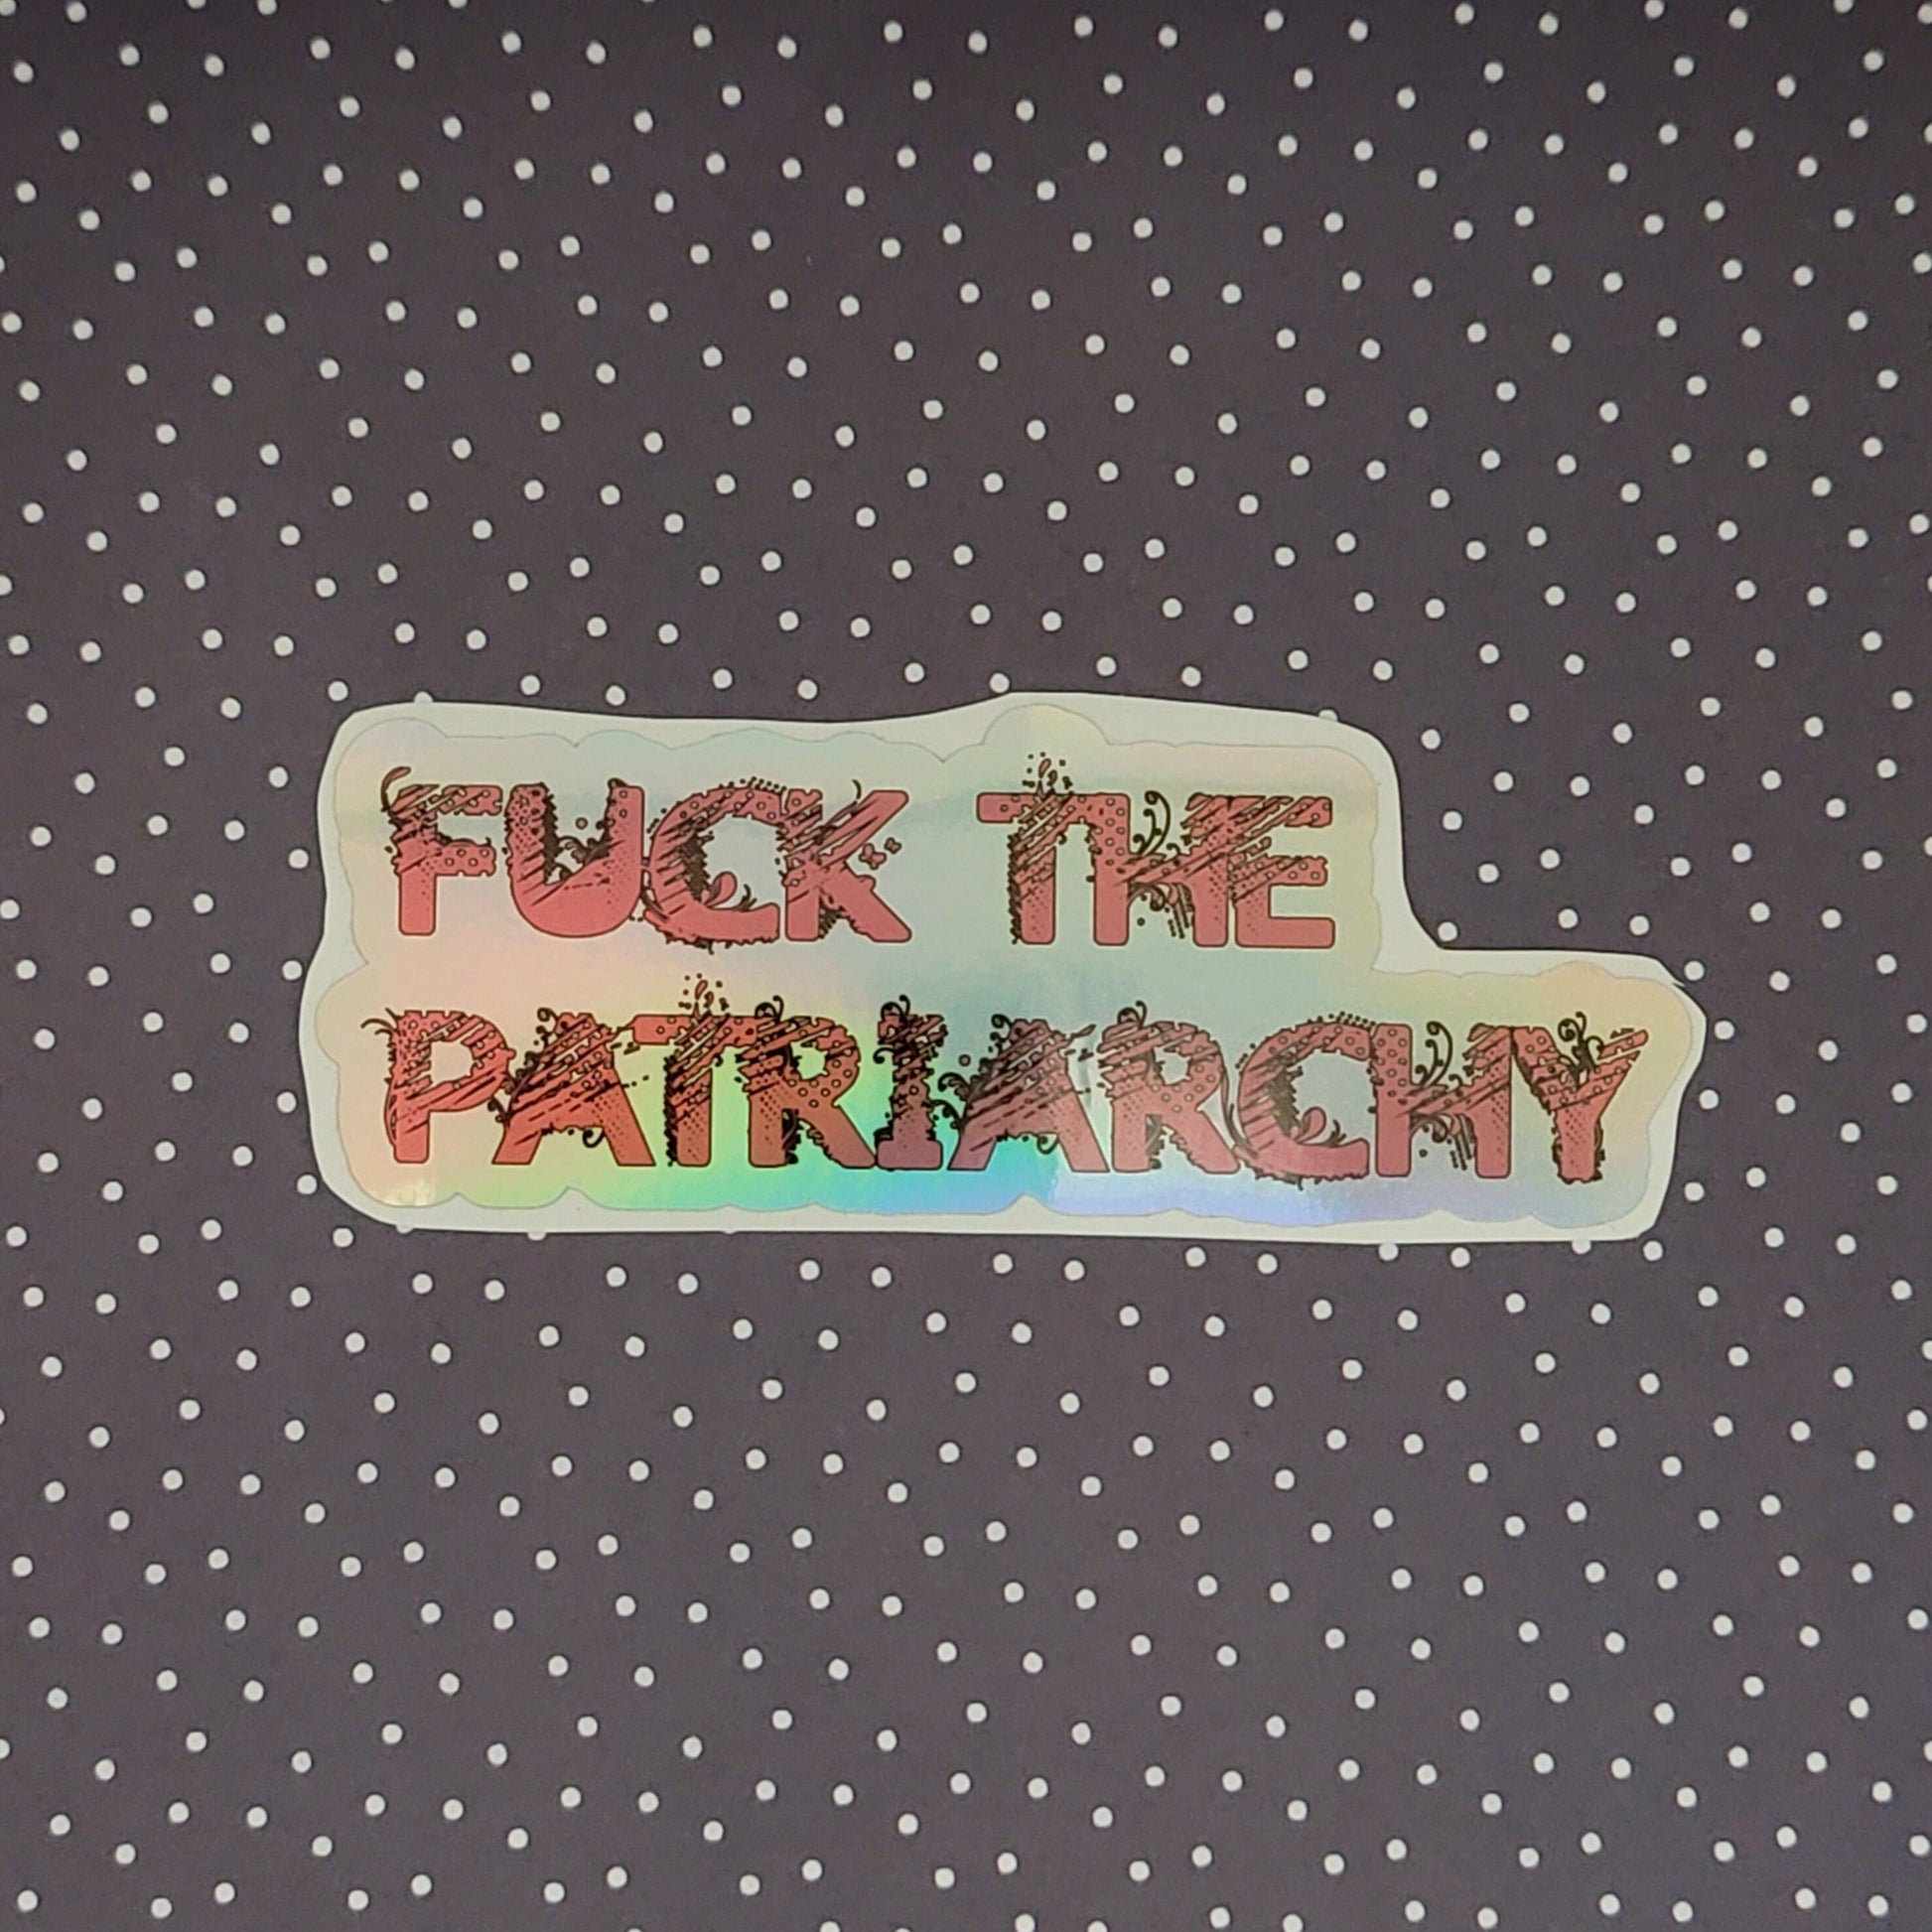 F*** the patriarchy sticker